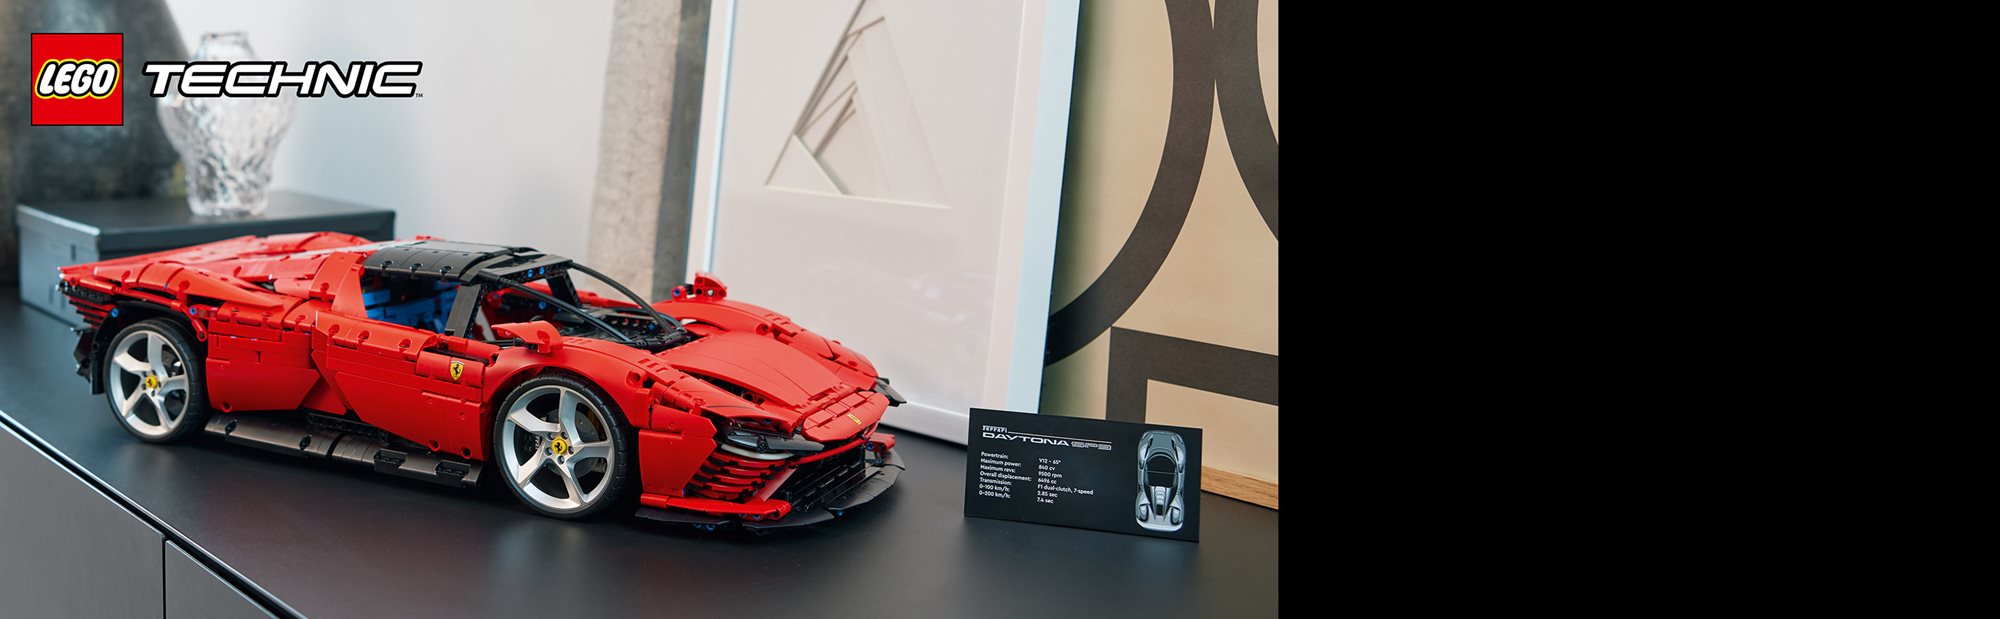 LEGO Technic: Ferrari Daytona SP3 Model Race Car Set (42143) Toys - Zavvi UK